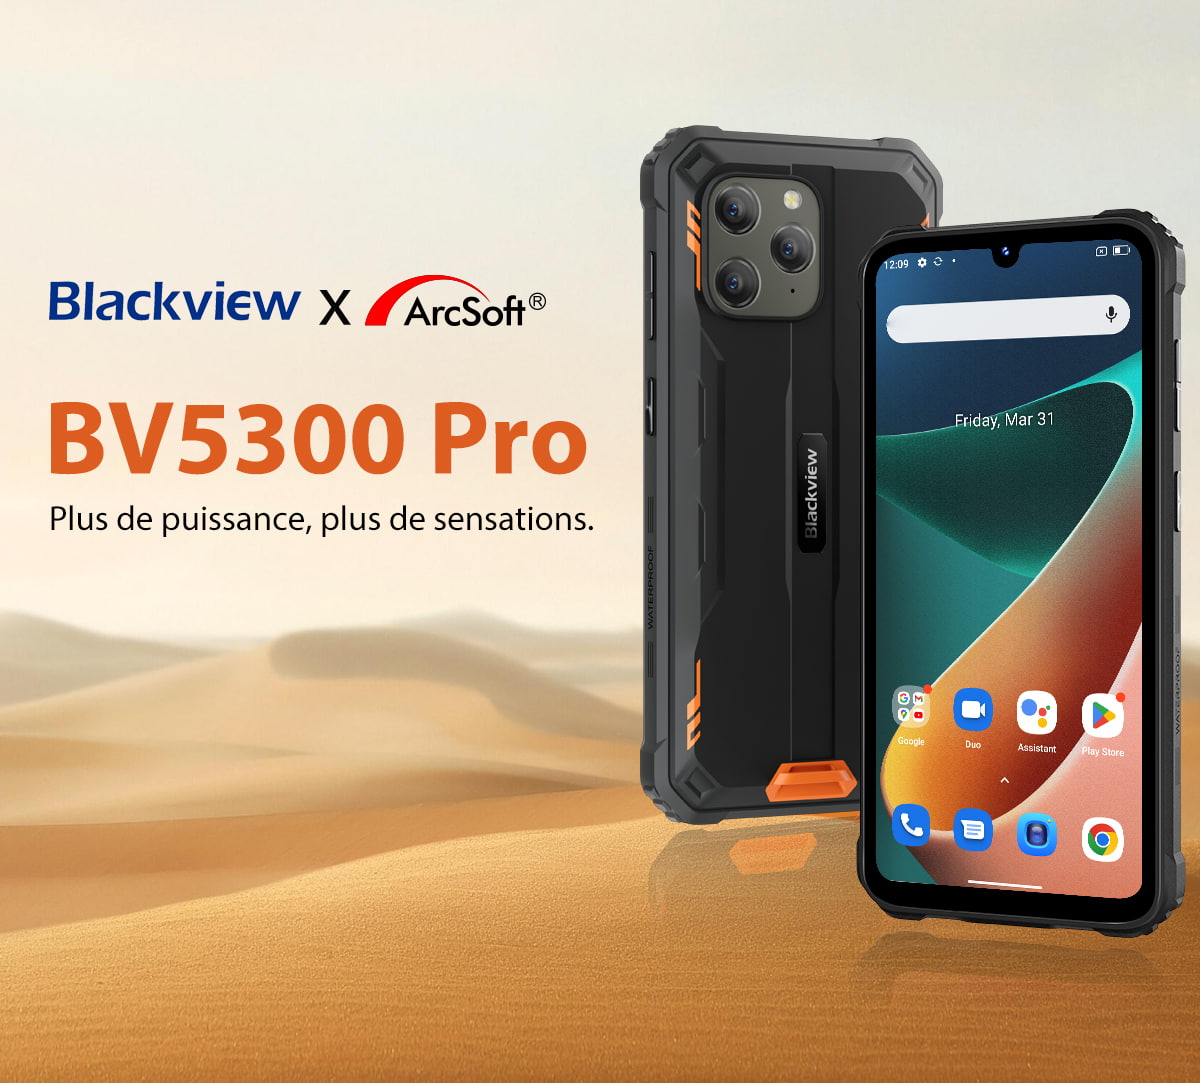 BV5300 Pro french description